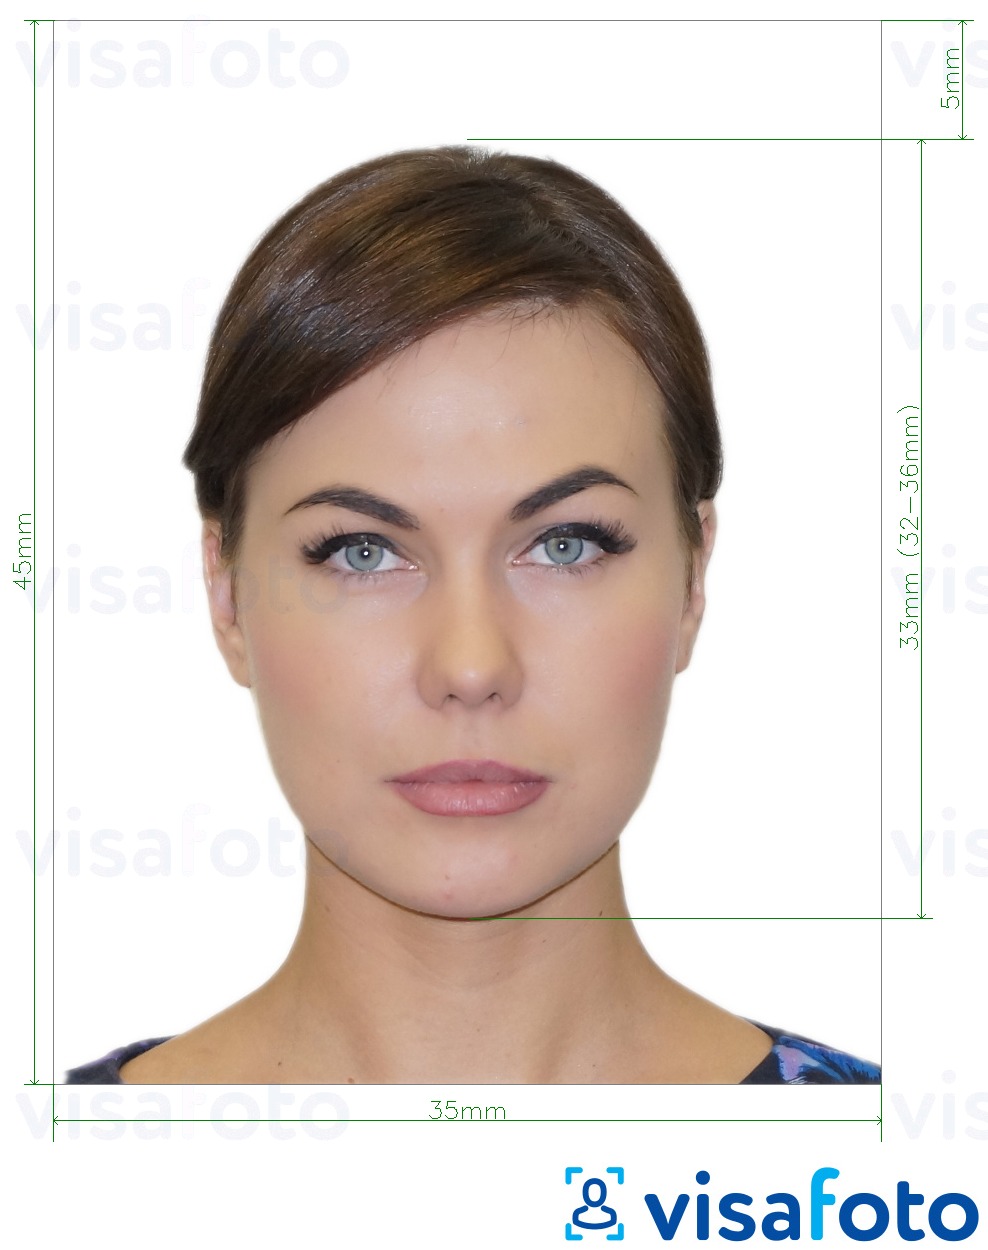 Contoh foto untuk Russian Fan ID  piksel dengan spesifikasi saiz yang tepat.